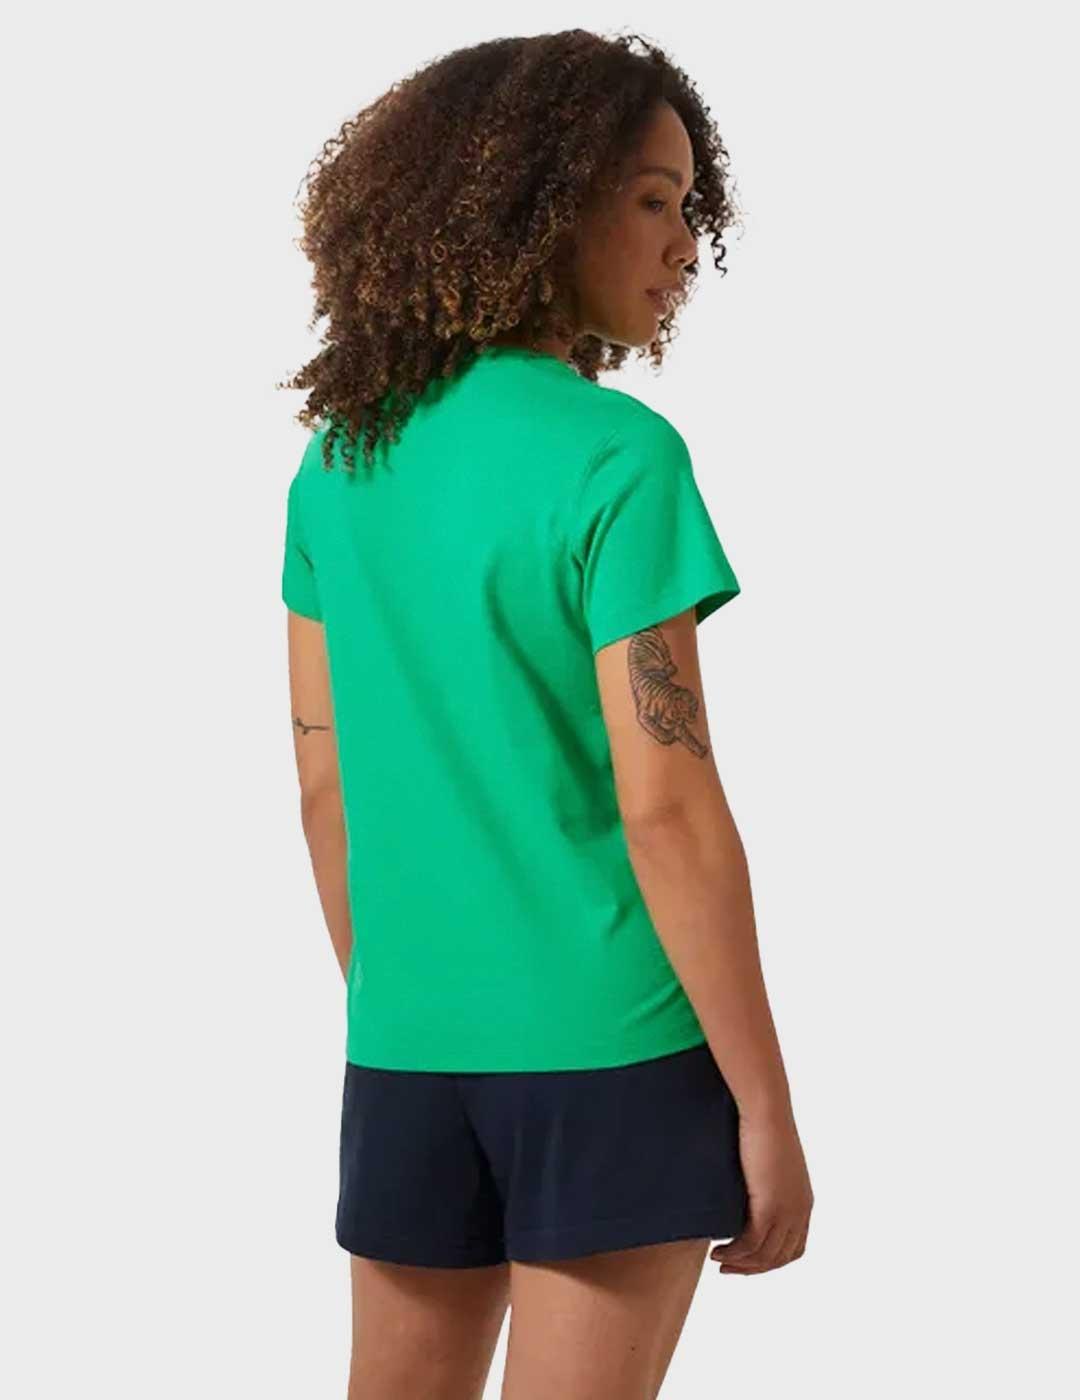 Helly Hanser w core graphit camiseta verde para mujer